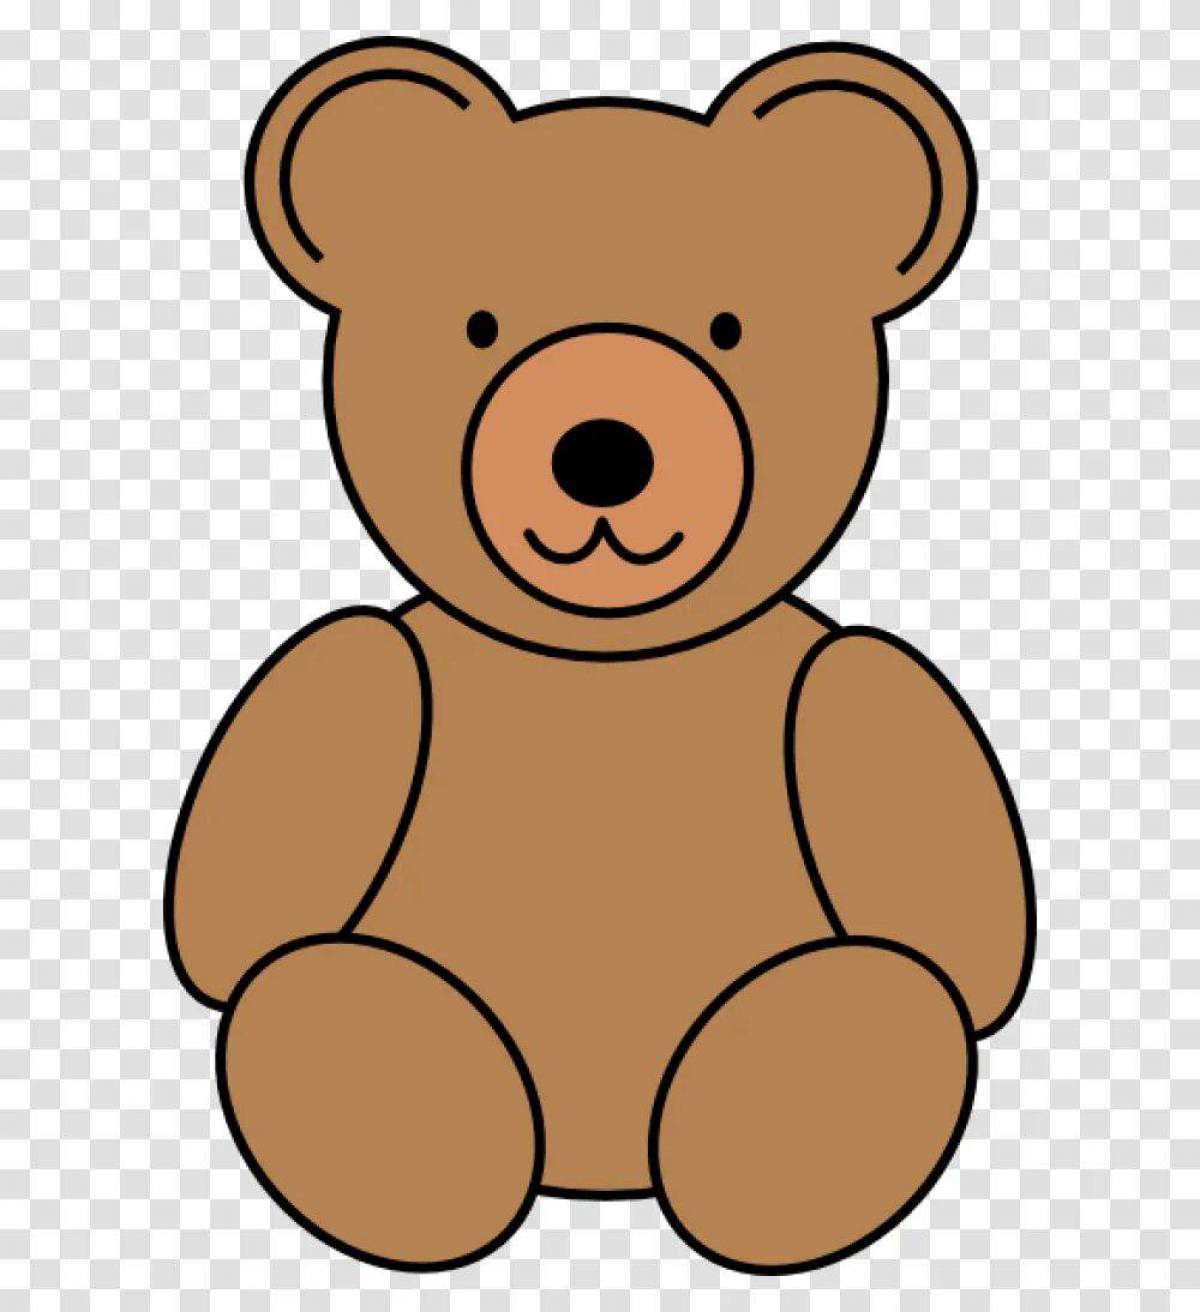 Teddy bear teddy bear turn around. Медвежонок рисунок. Медведь для детей на прозрачном фоне. Нарисовать мишку. Медвежонок рисунок для детей.